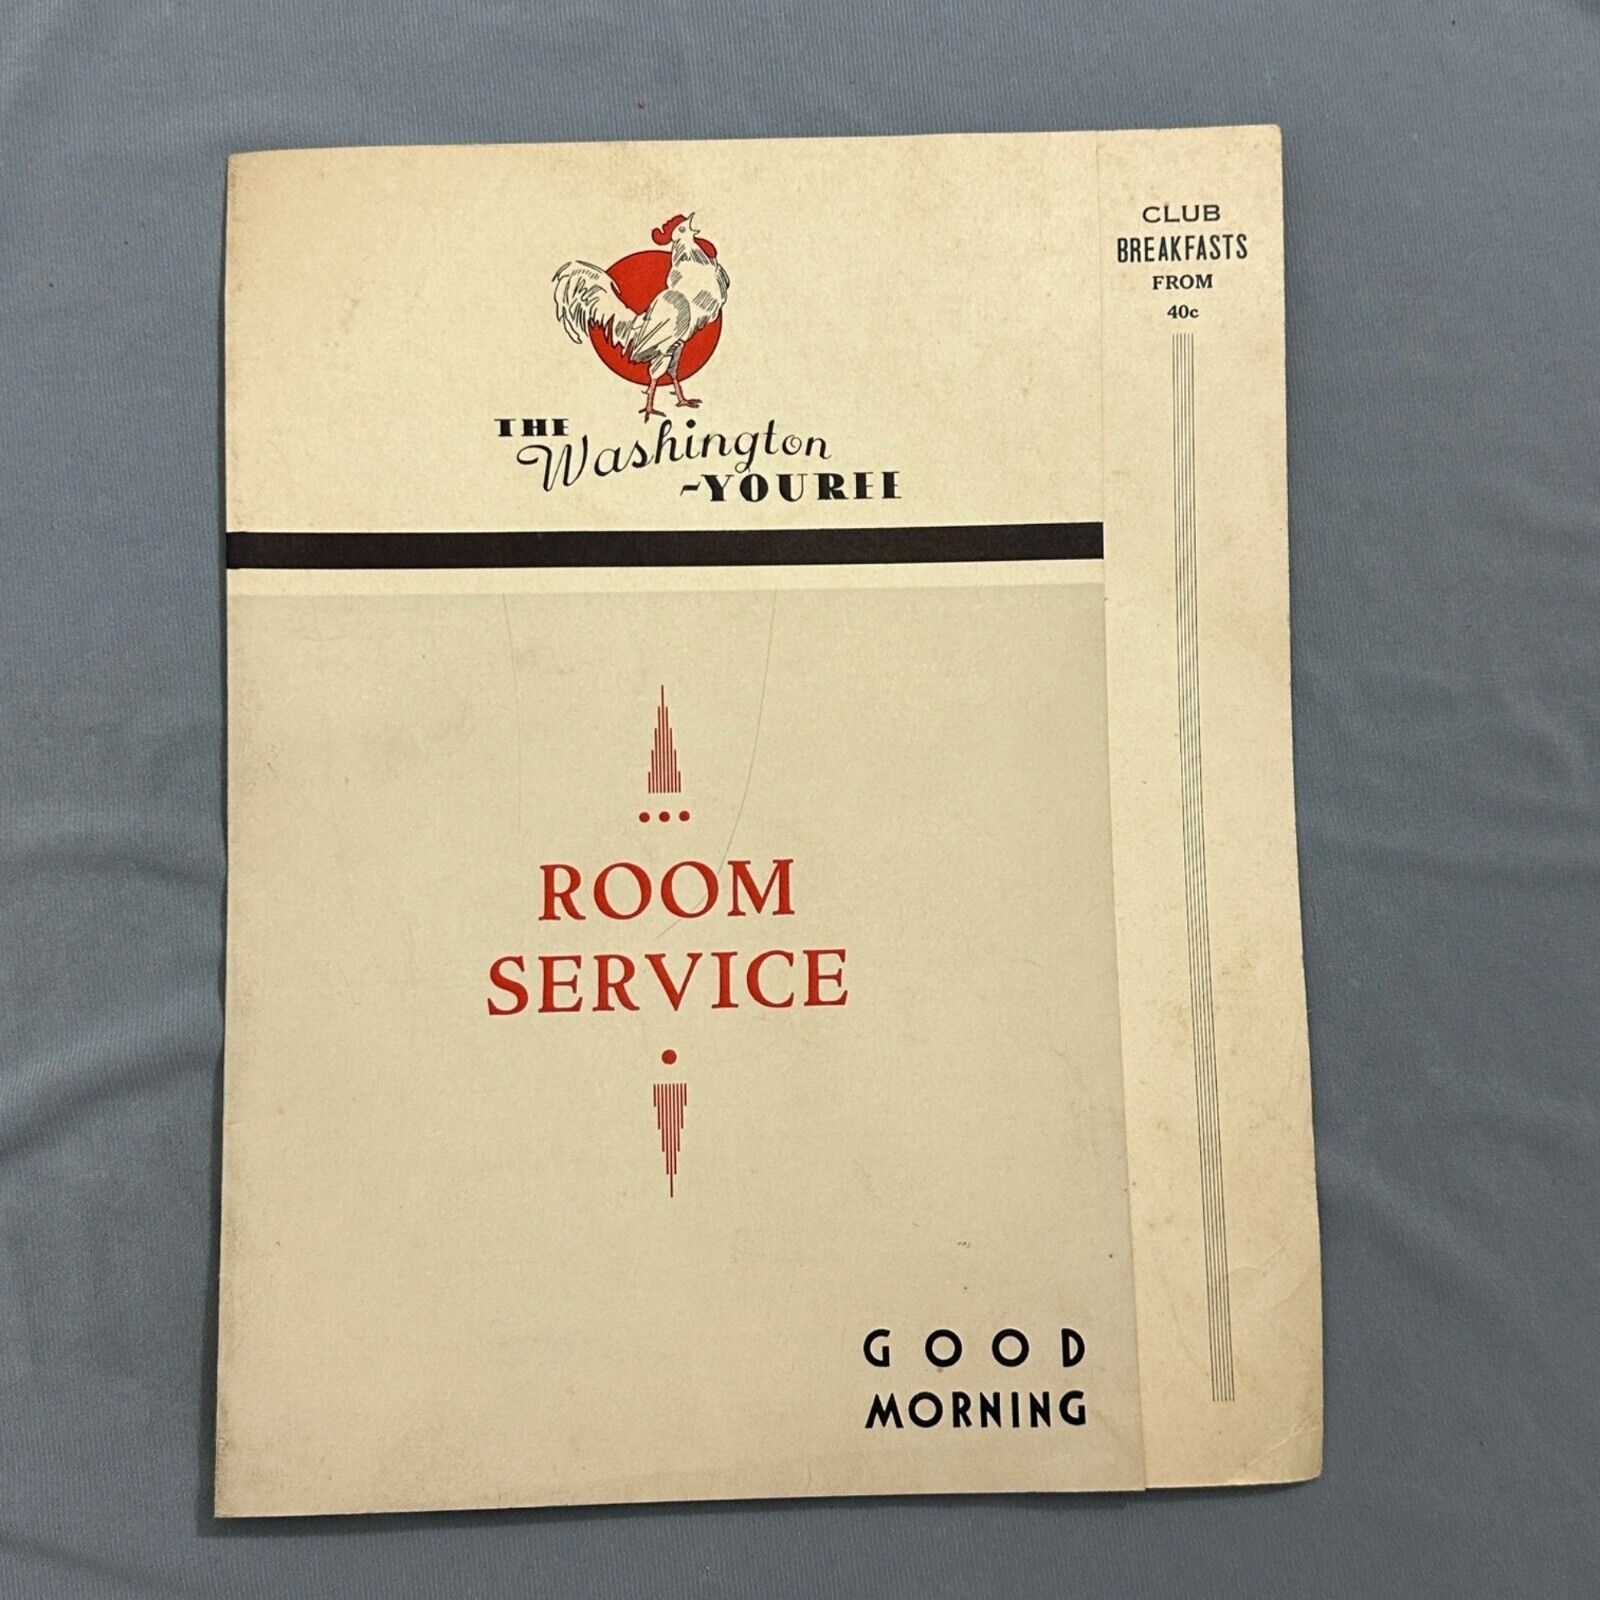 Vintage Menu Washington Youree Hotel Shreveport LA Morning Room Service